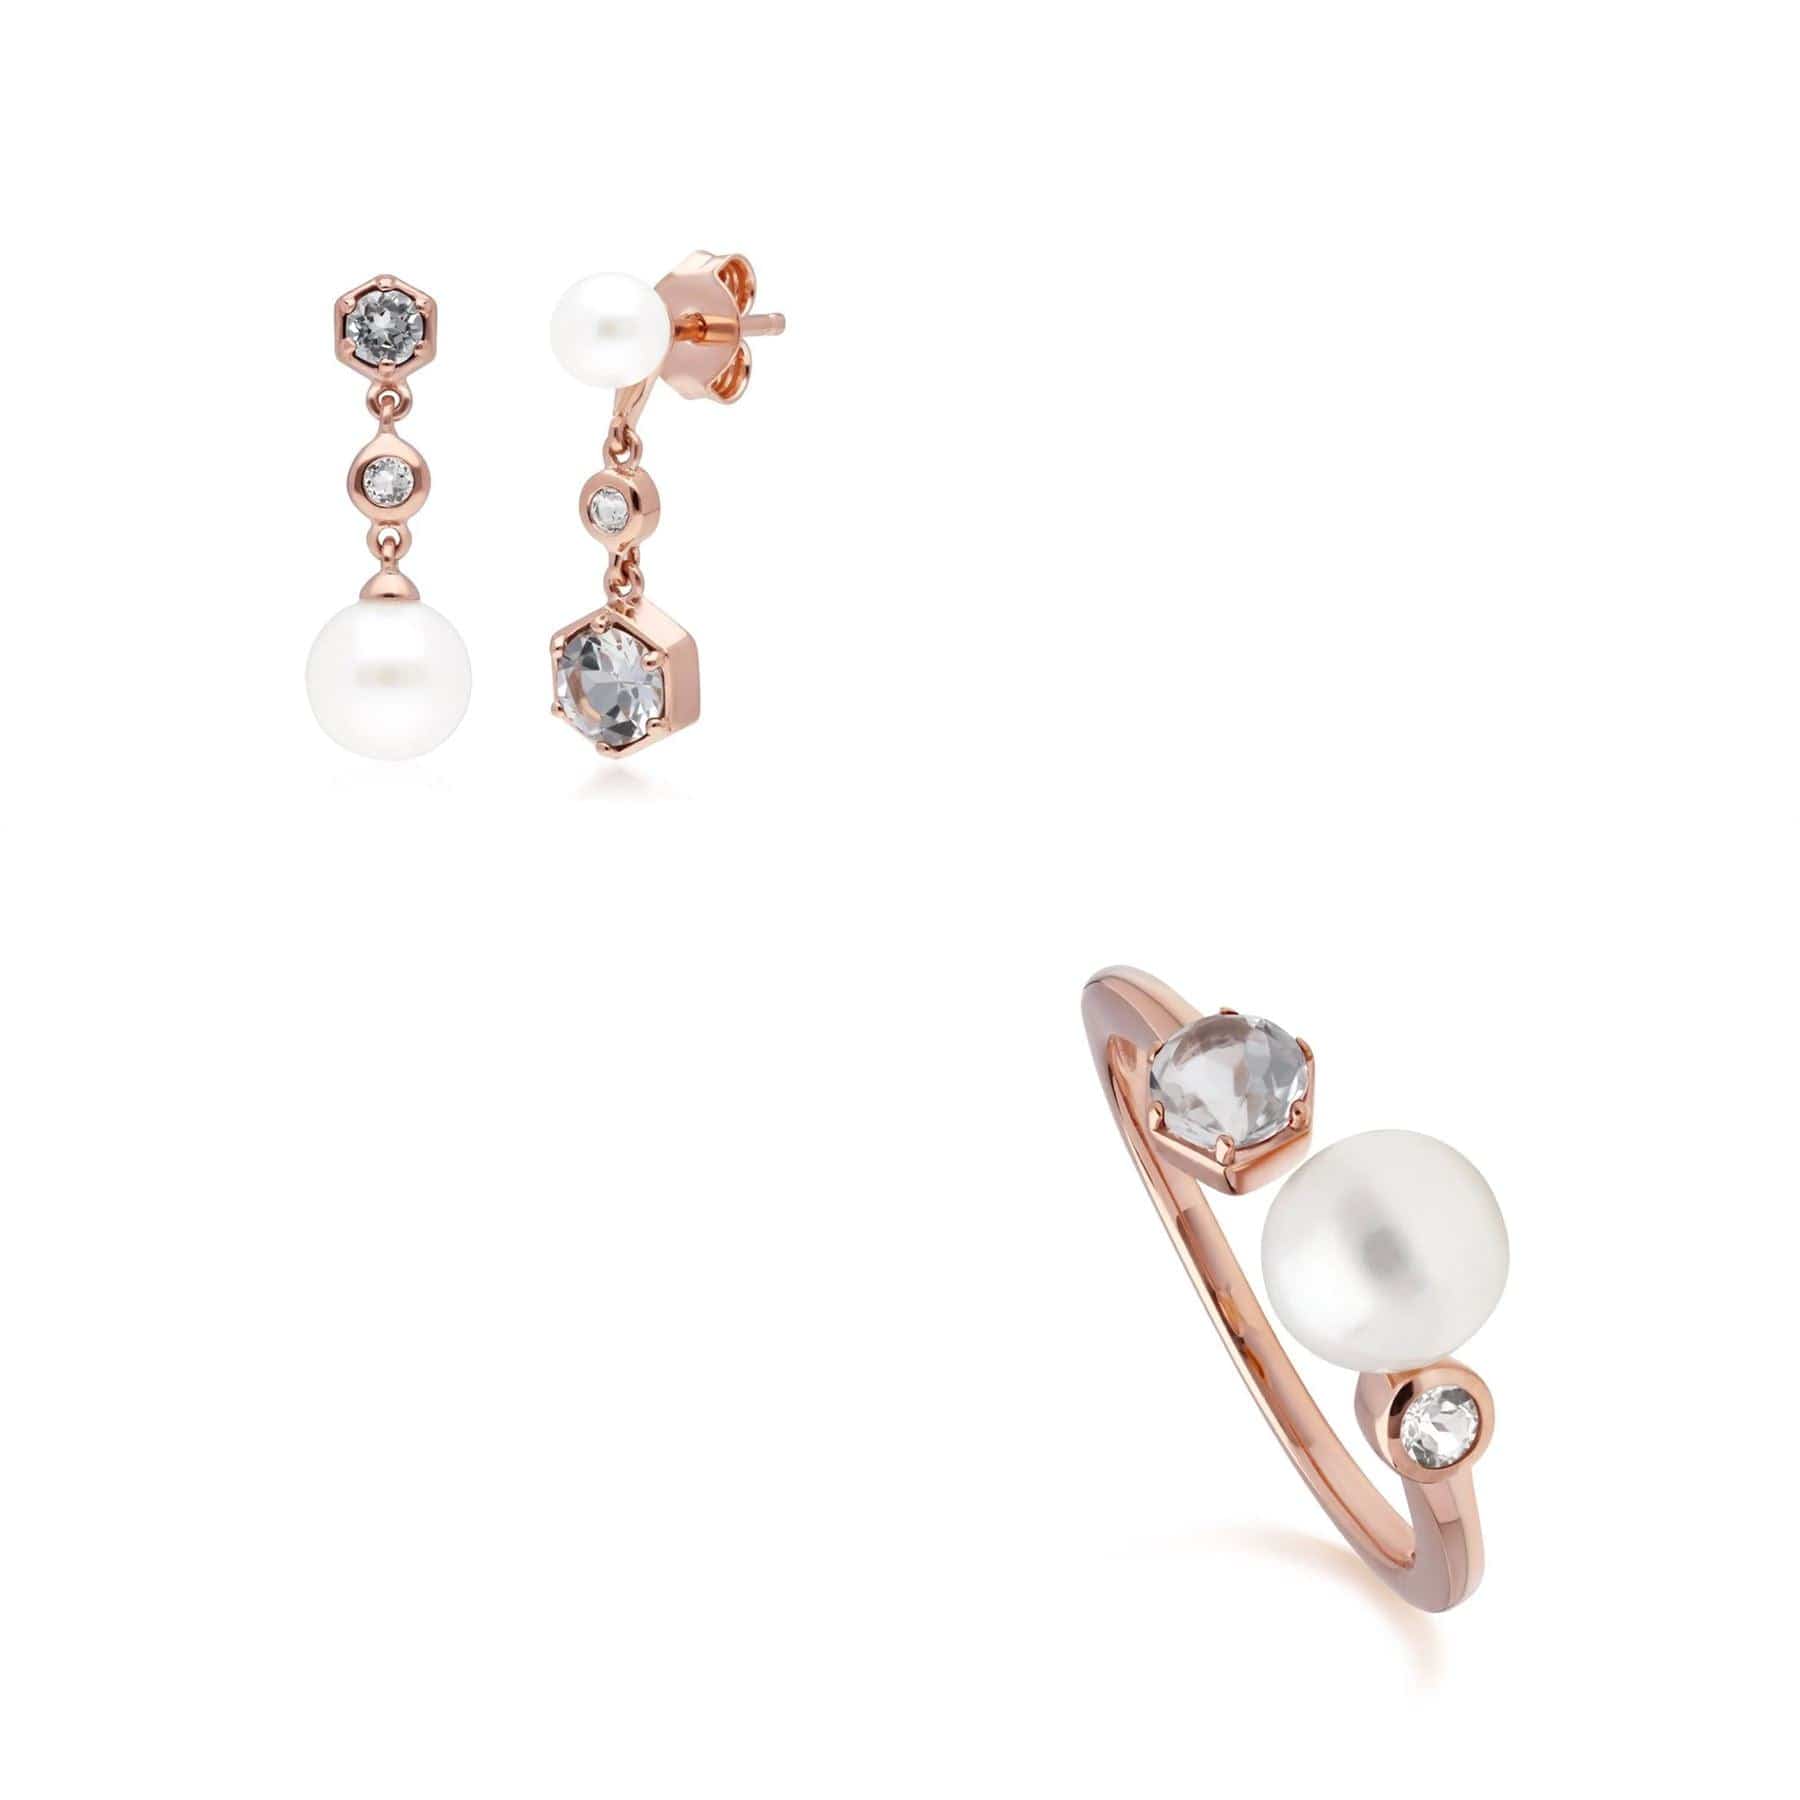 Modern Pearl & White Topaz Earring & Ring Set in Rose Gold Plated Silver - Gemondo